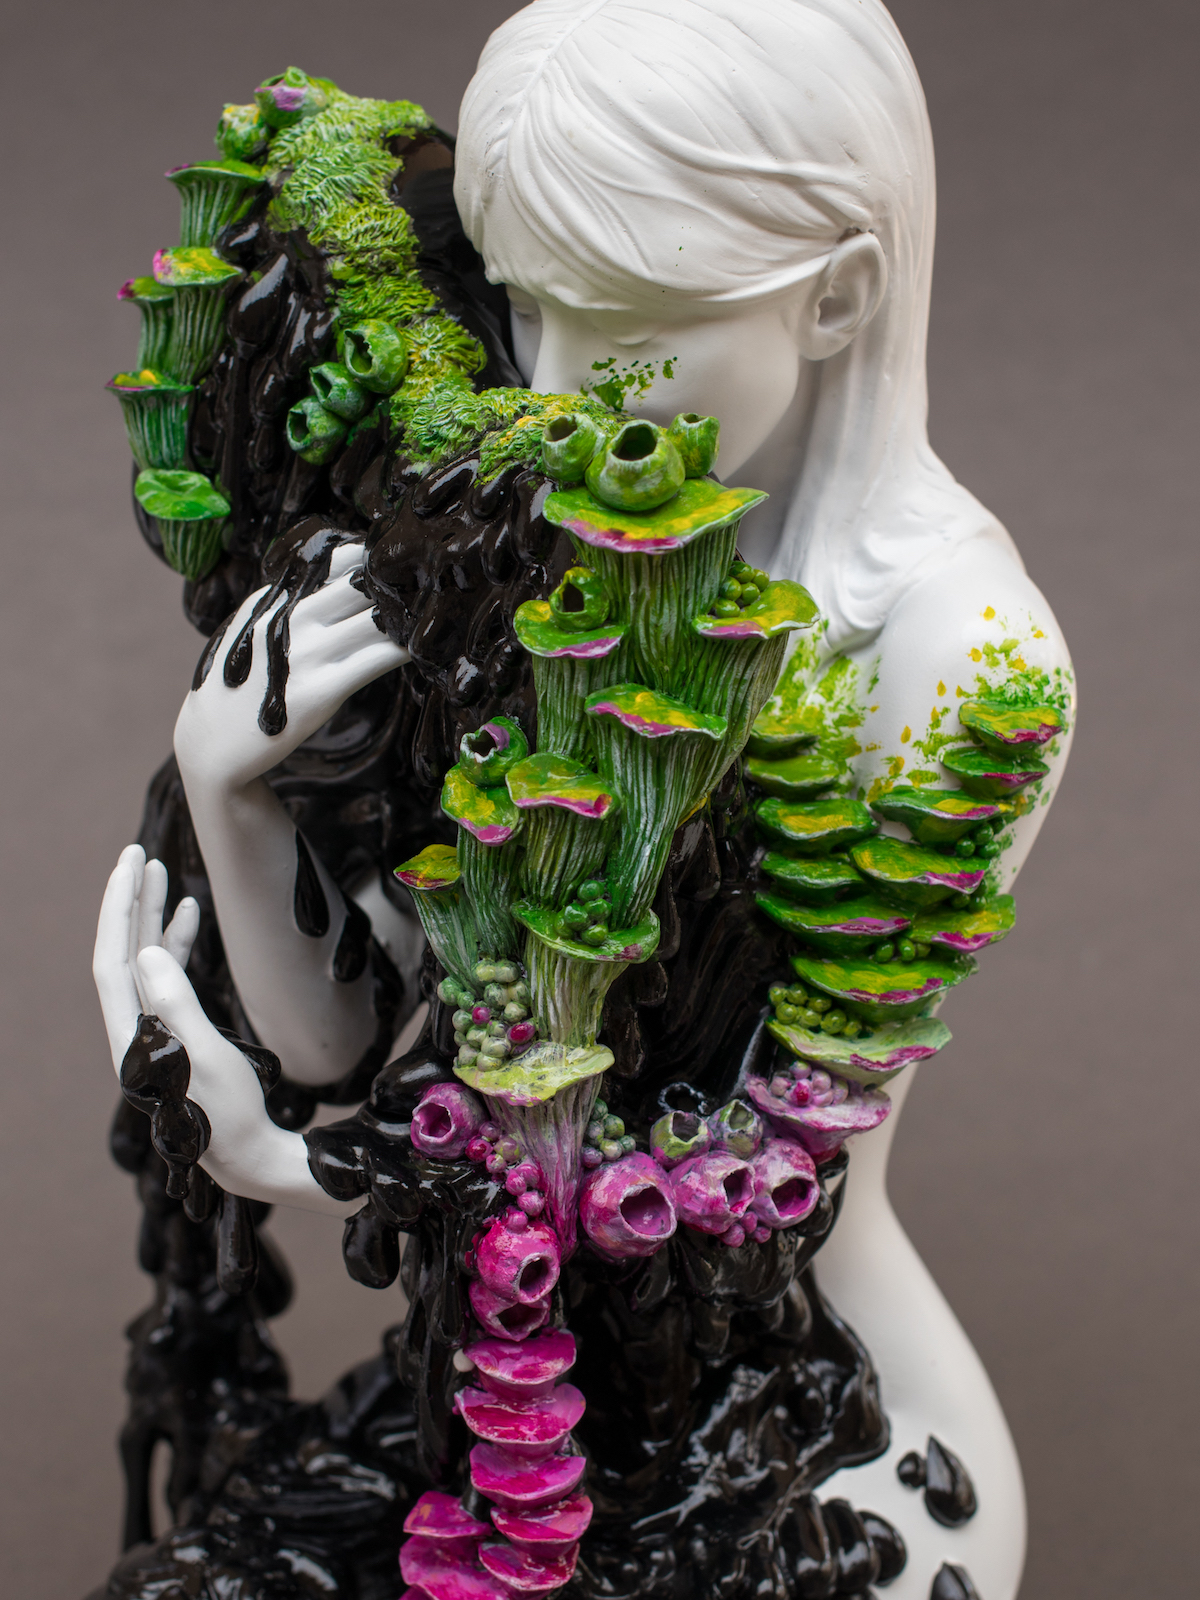 Surreal Sculptures by Miles Johnston and Stephanie Kilgast